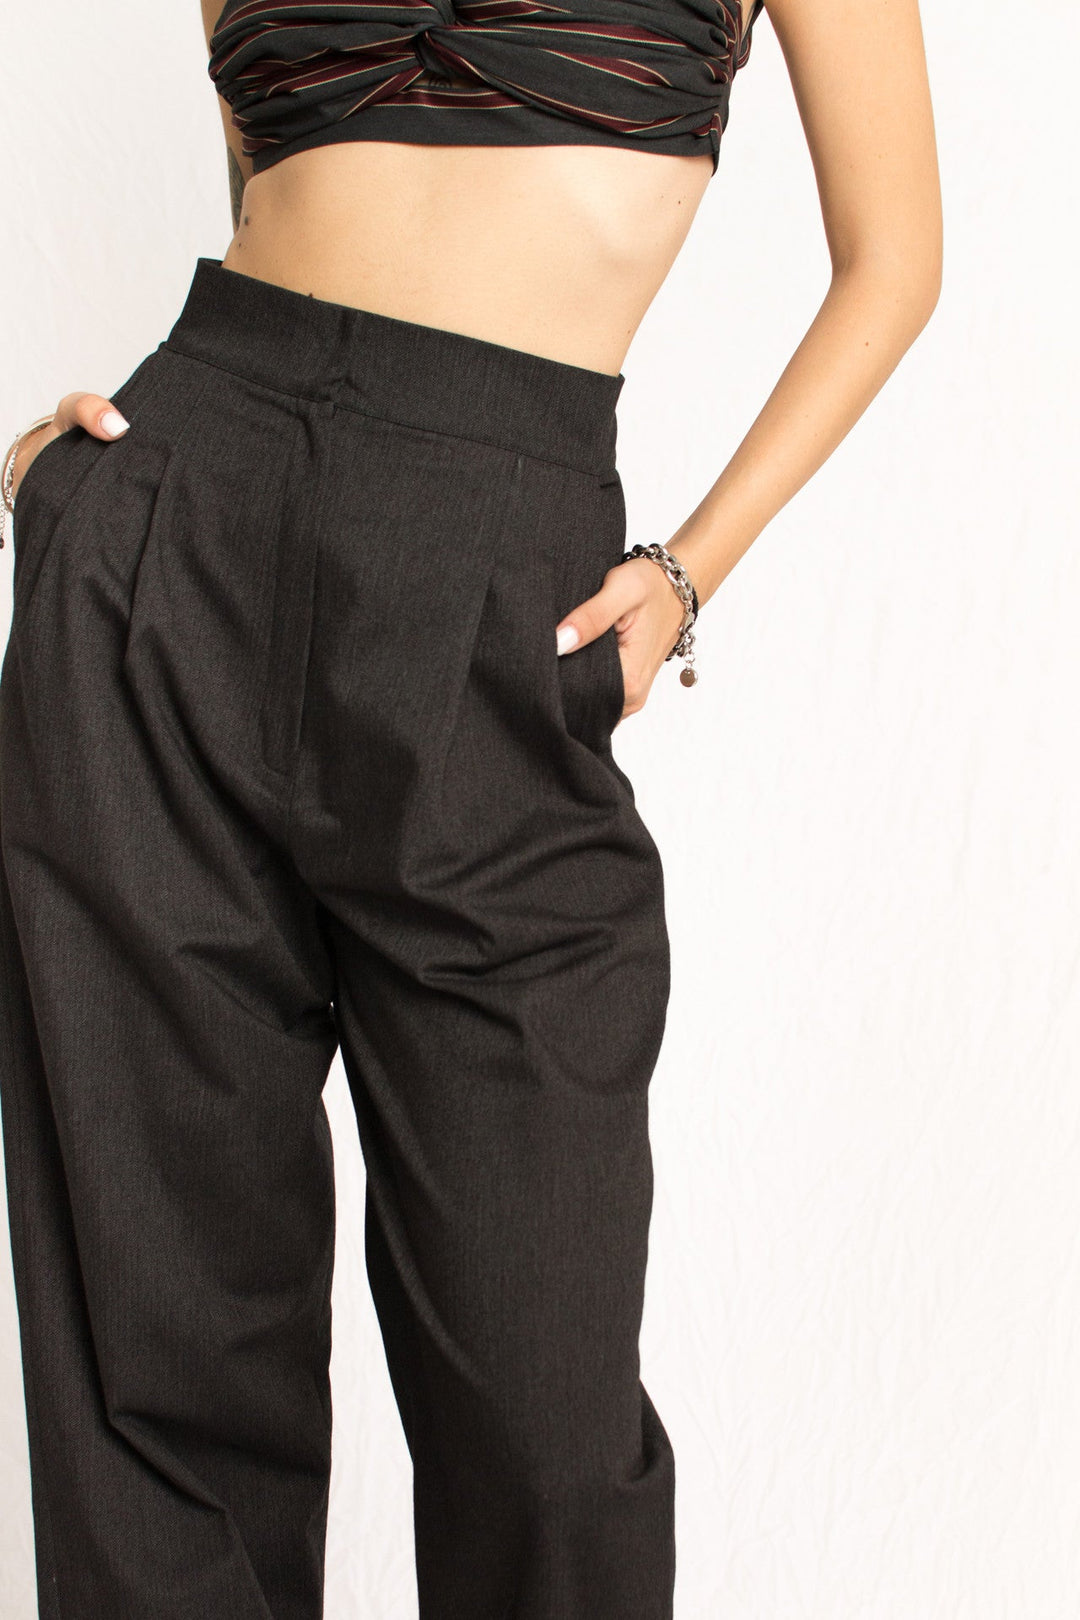 grey wool high waist pants with pockets